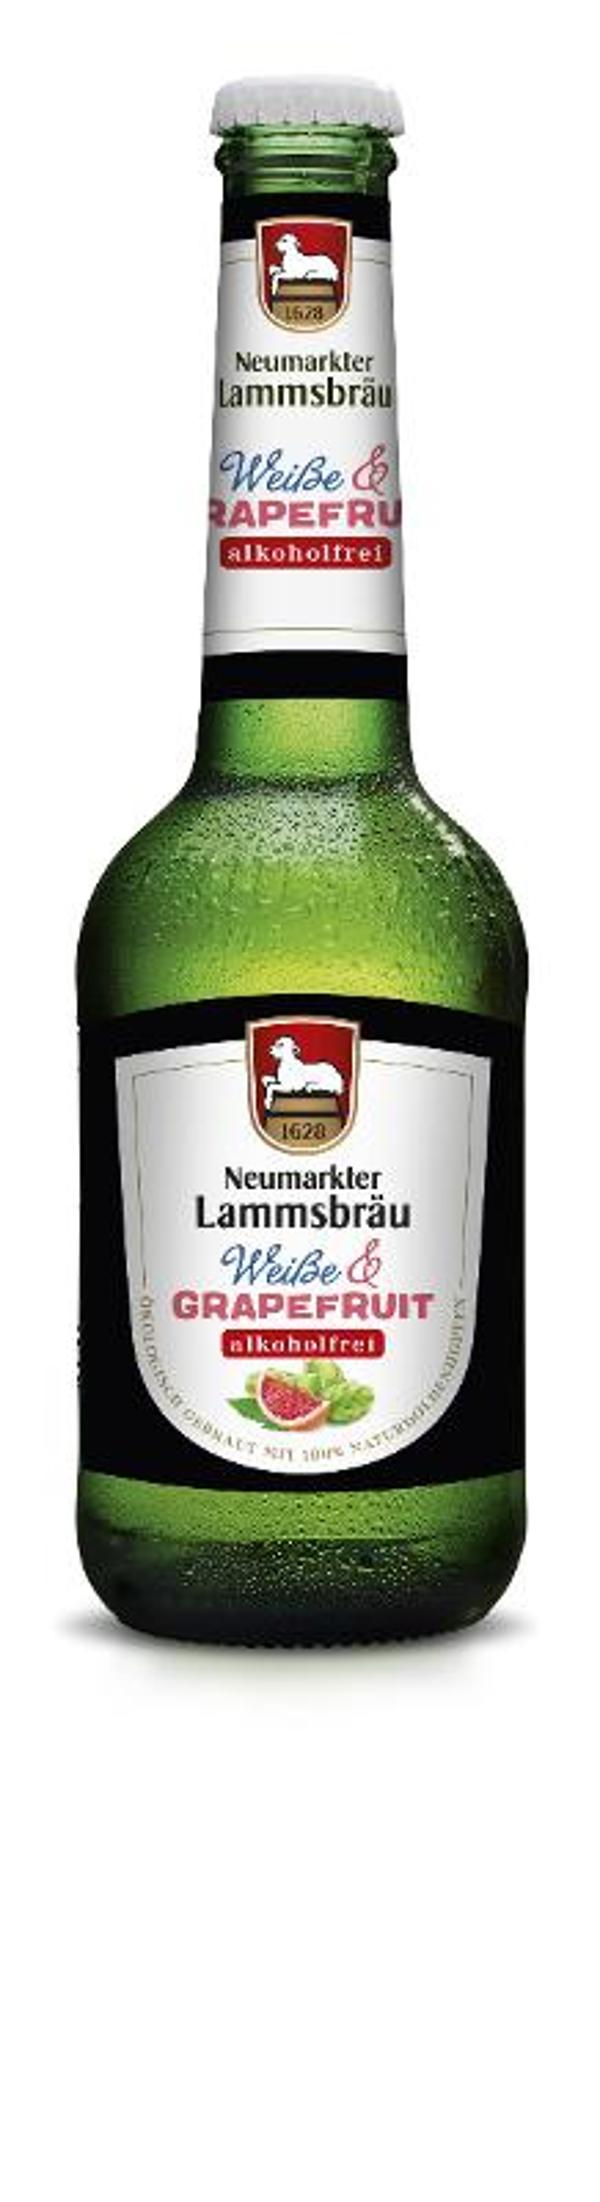 Produktfoto zu Lammsbräu Weiße +Grapefruit alkohlofrei Kiste